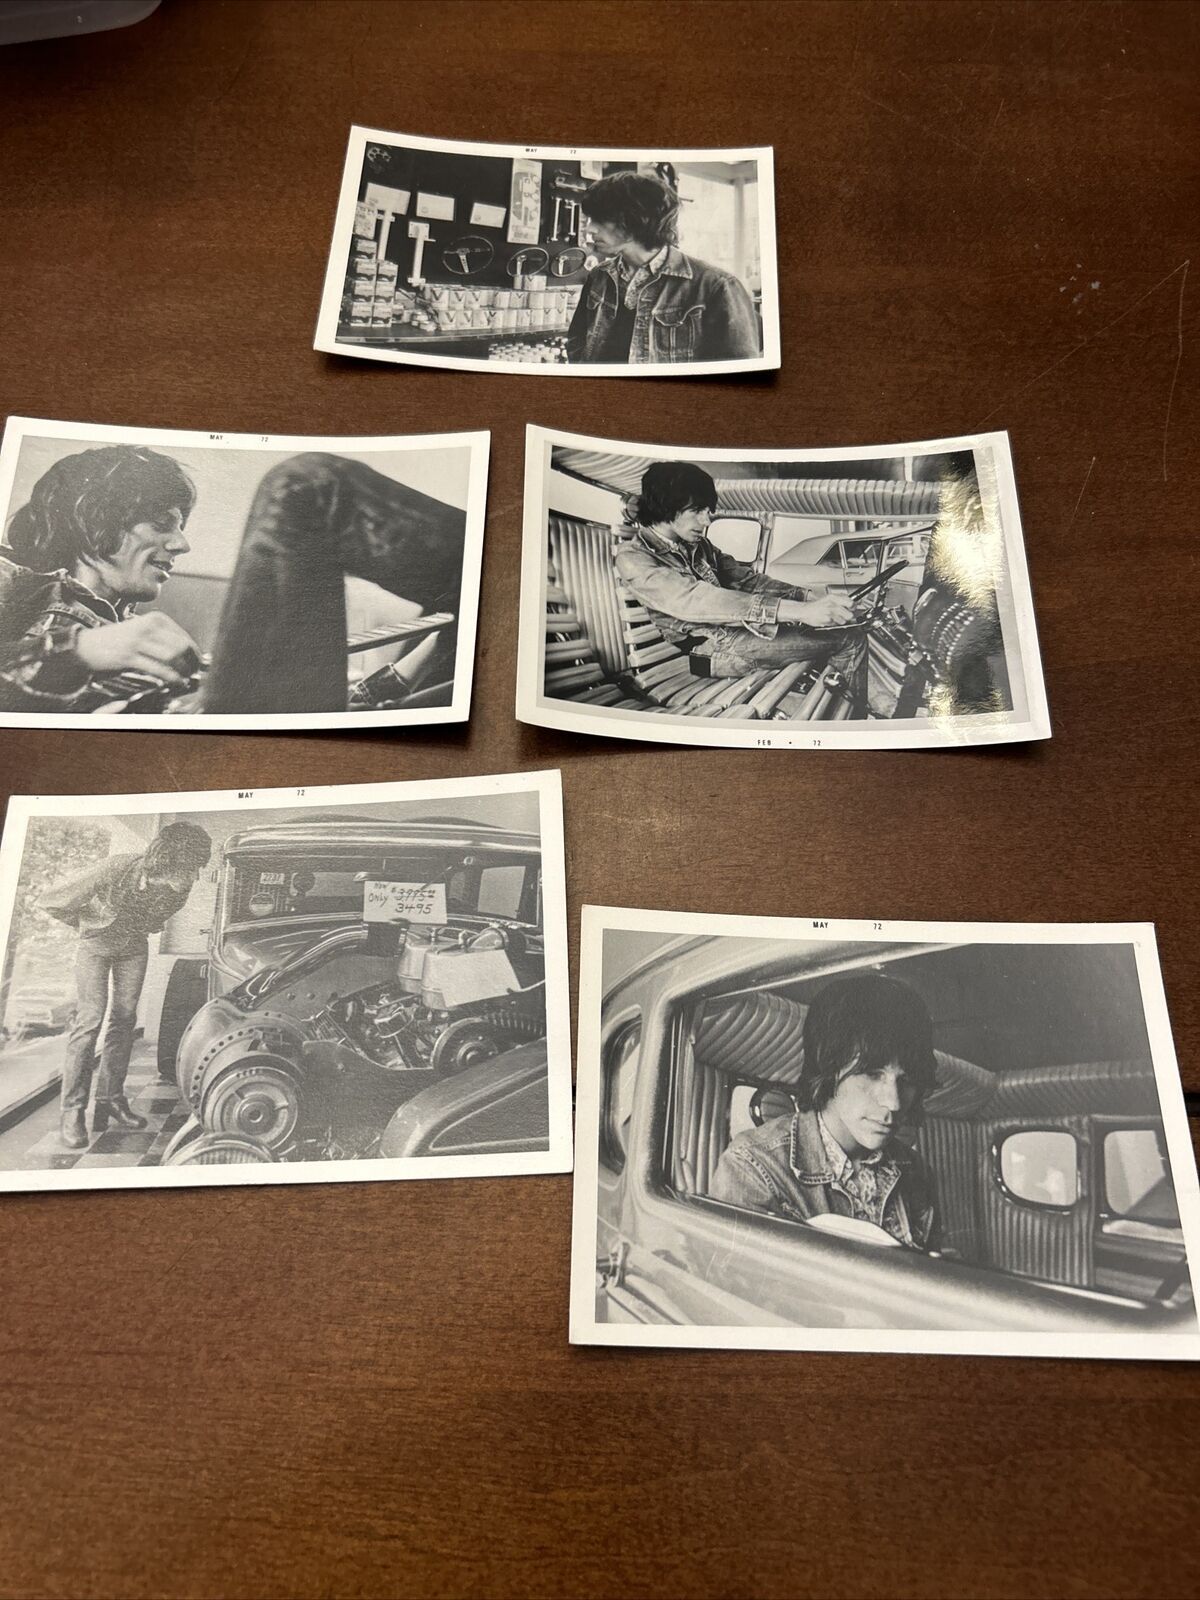 JEFF BECK Buying Hot Rod Car BARON WOLMAN Photos 3x5 Lot Of 5 Vintage 70s Prints